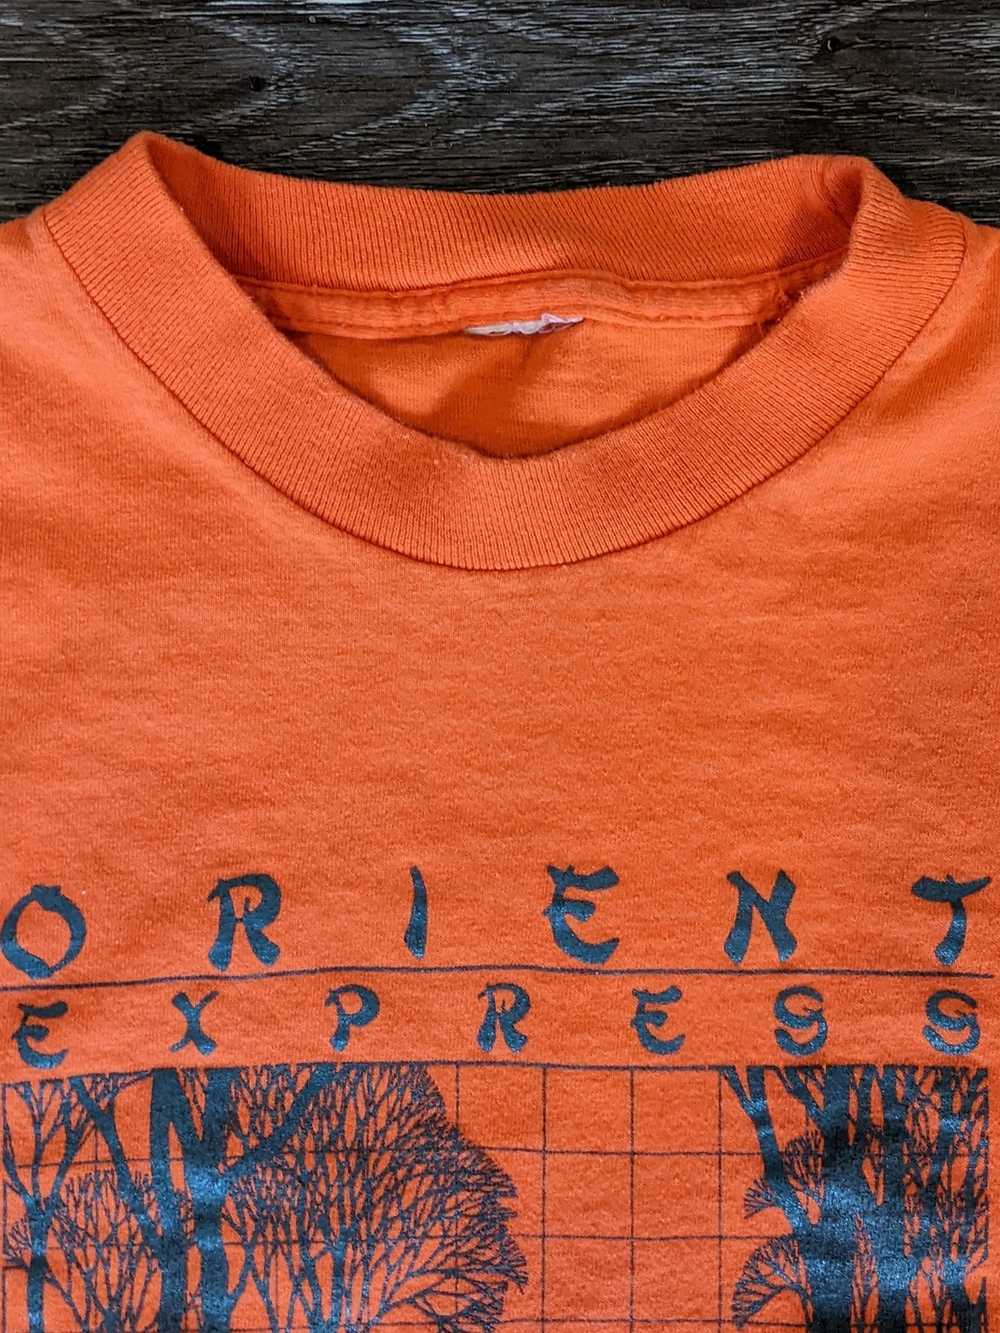 Vintage Vintage Orient Express marathon t-shirt - image 4